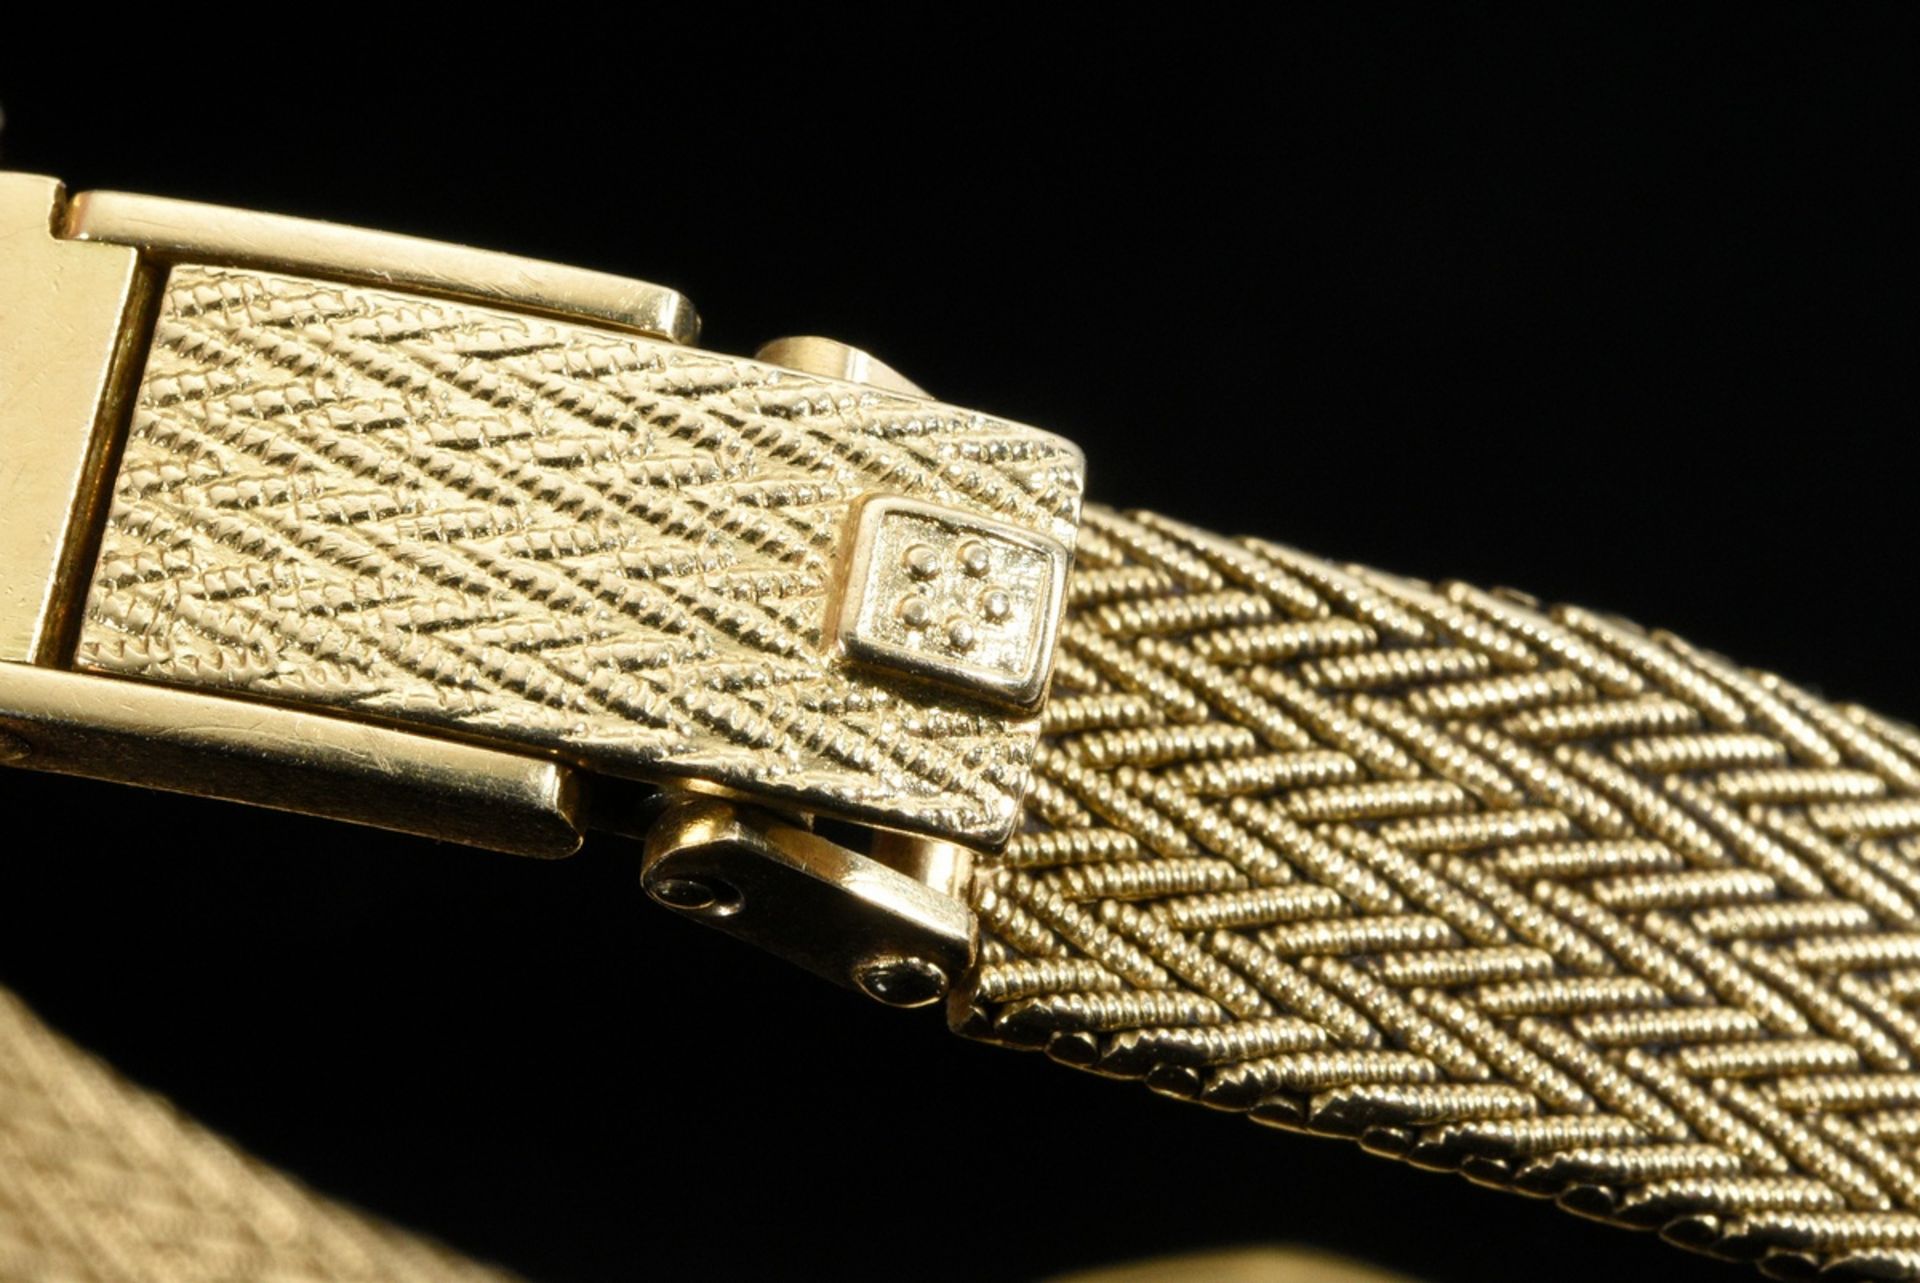 Eterna yellow gold 750 ladies' wristwatch with braided bracelet, quartz, black dial, date, Roman nu - Image 4 of 4